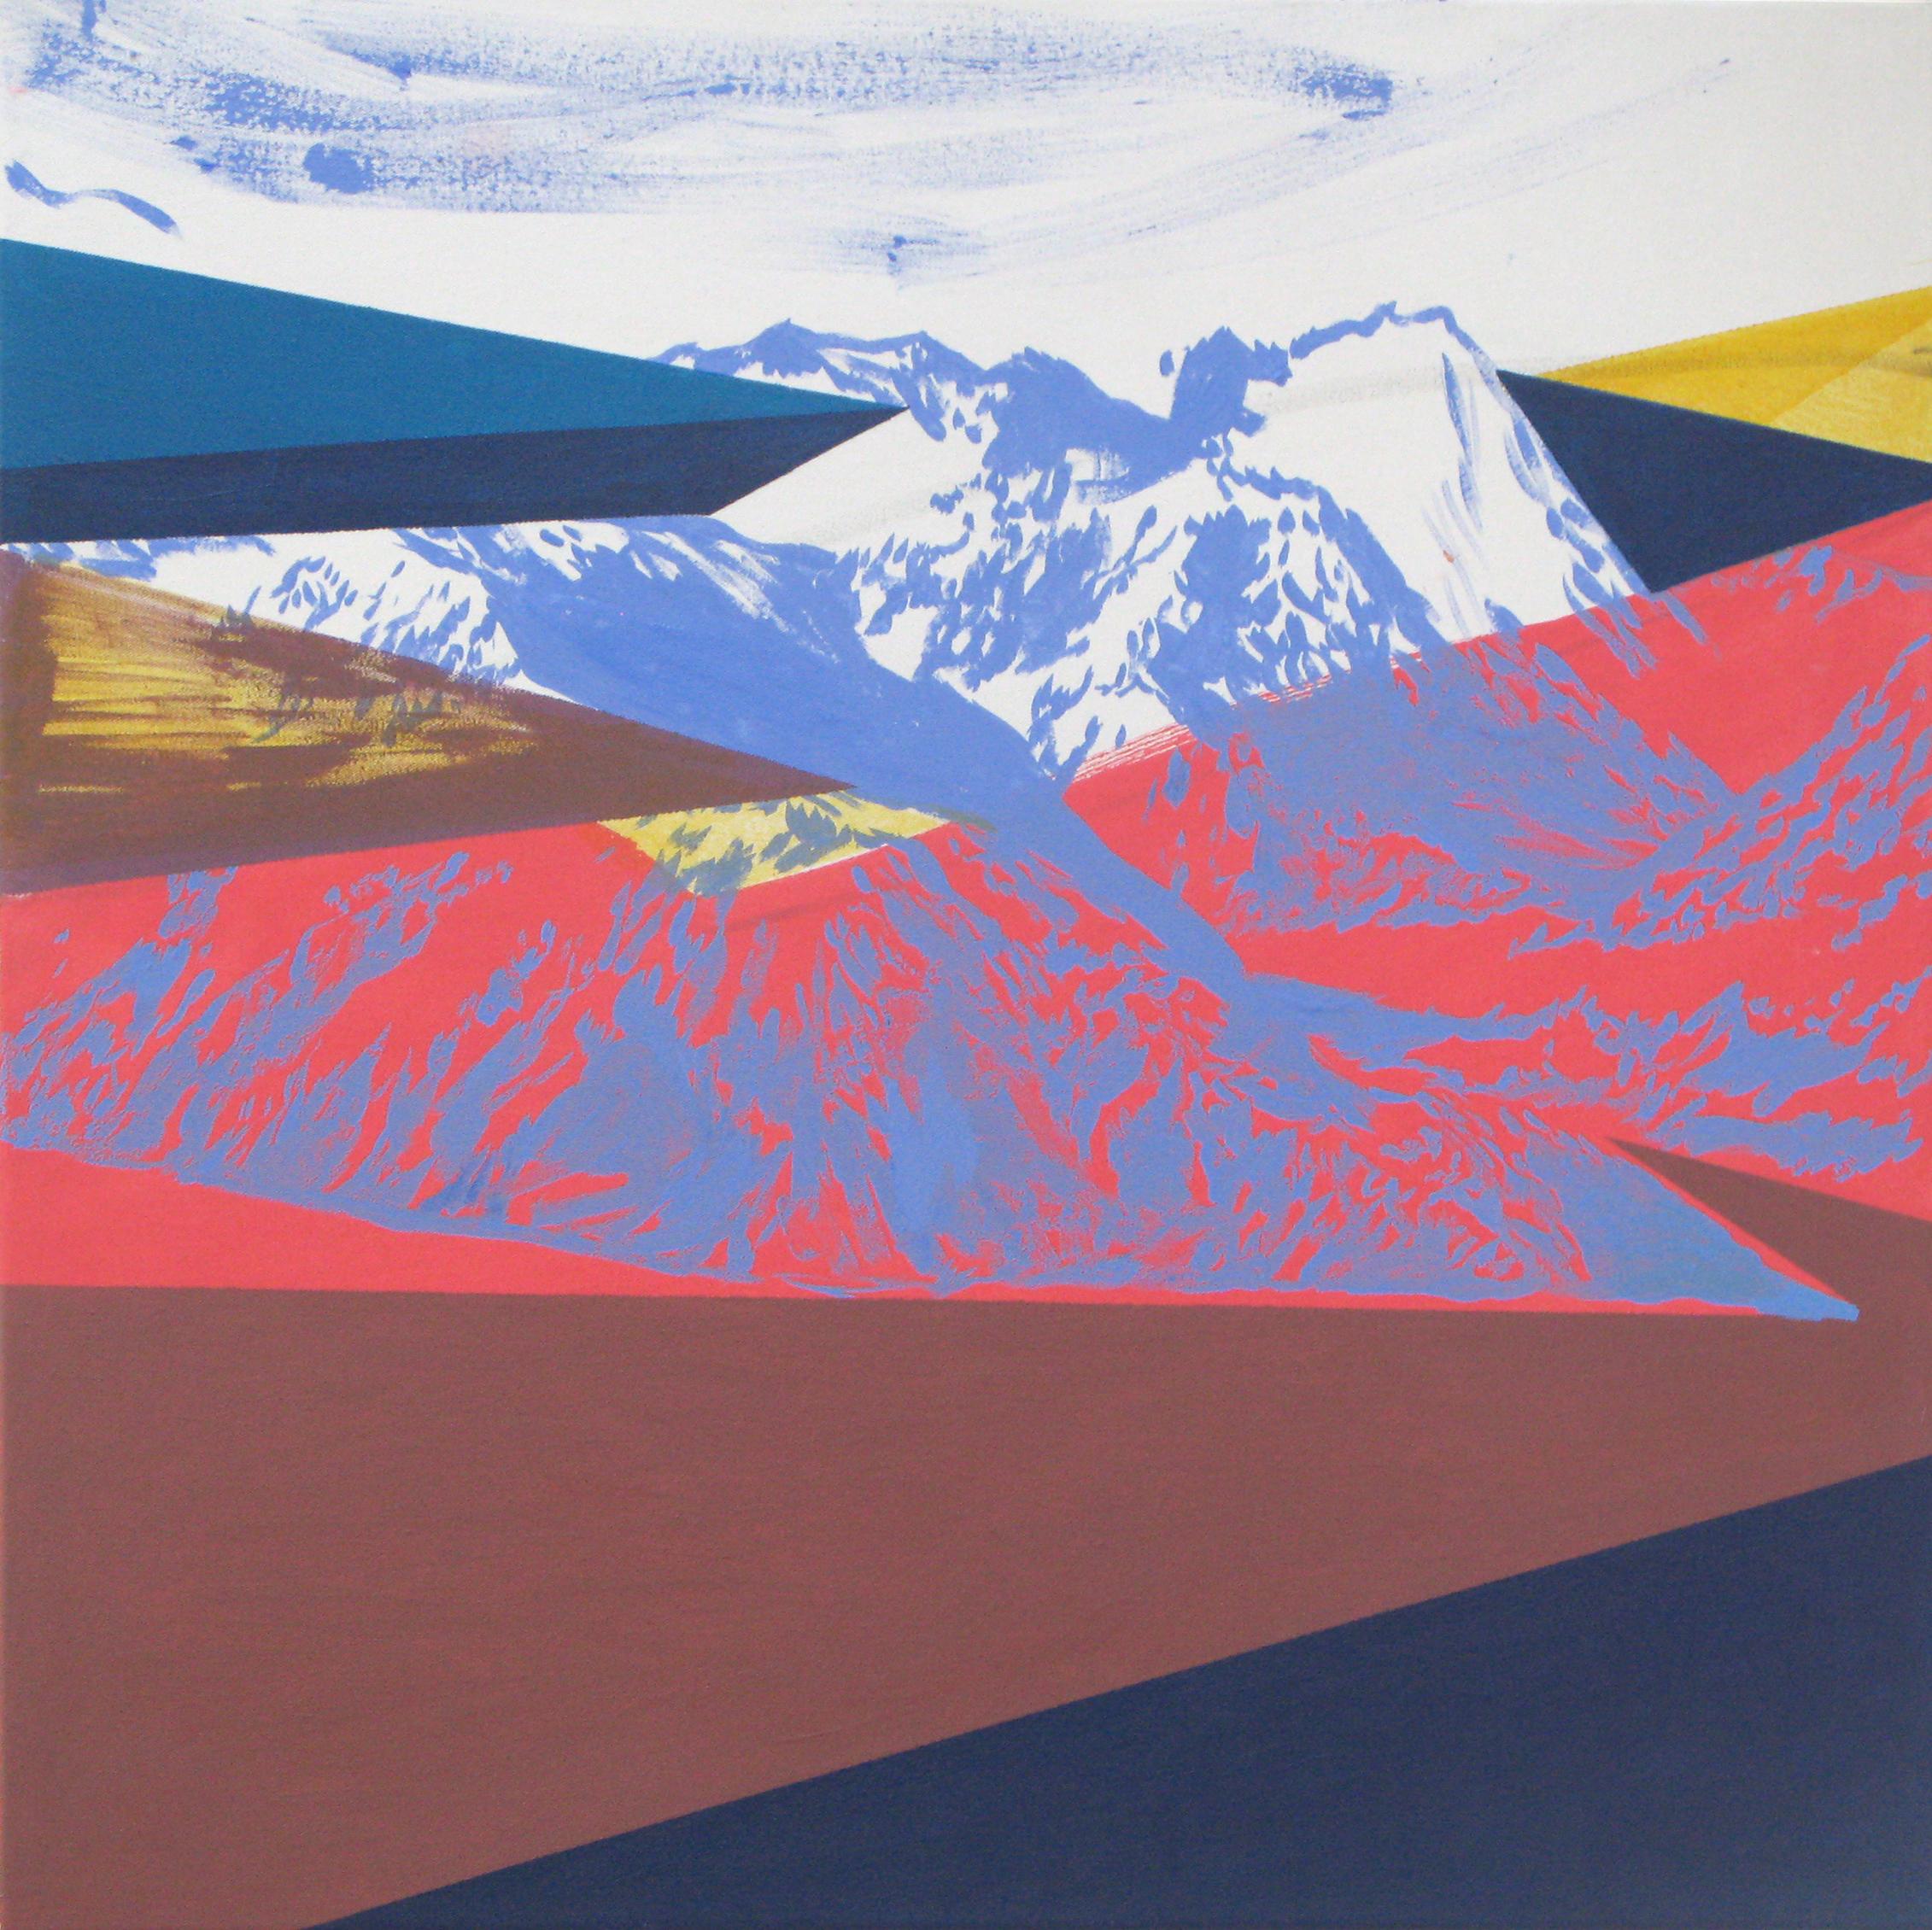 Anna Ładecka Landscape Painting – Road - Moderne Landschaft und Berge Gemälde, abstrakt, fröhlich, farbenfroh